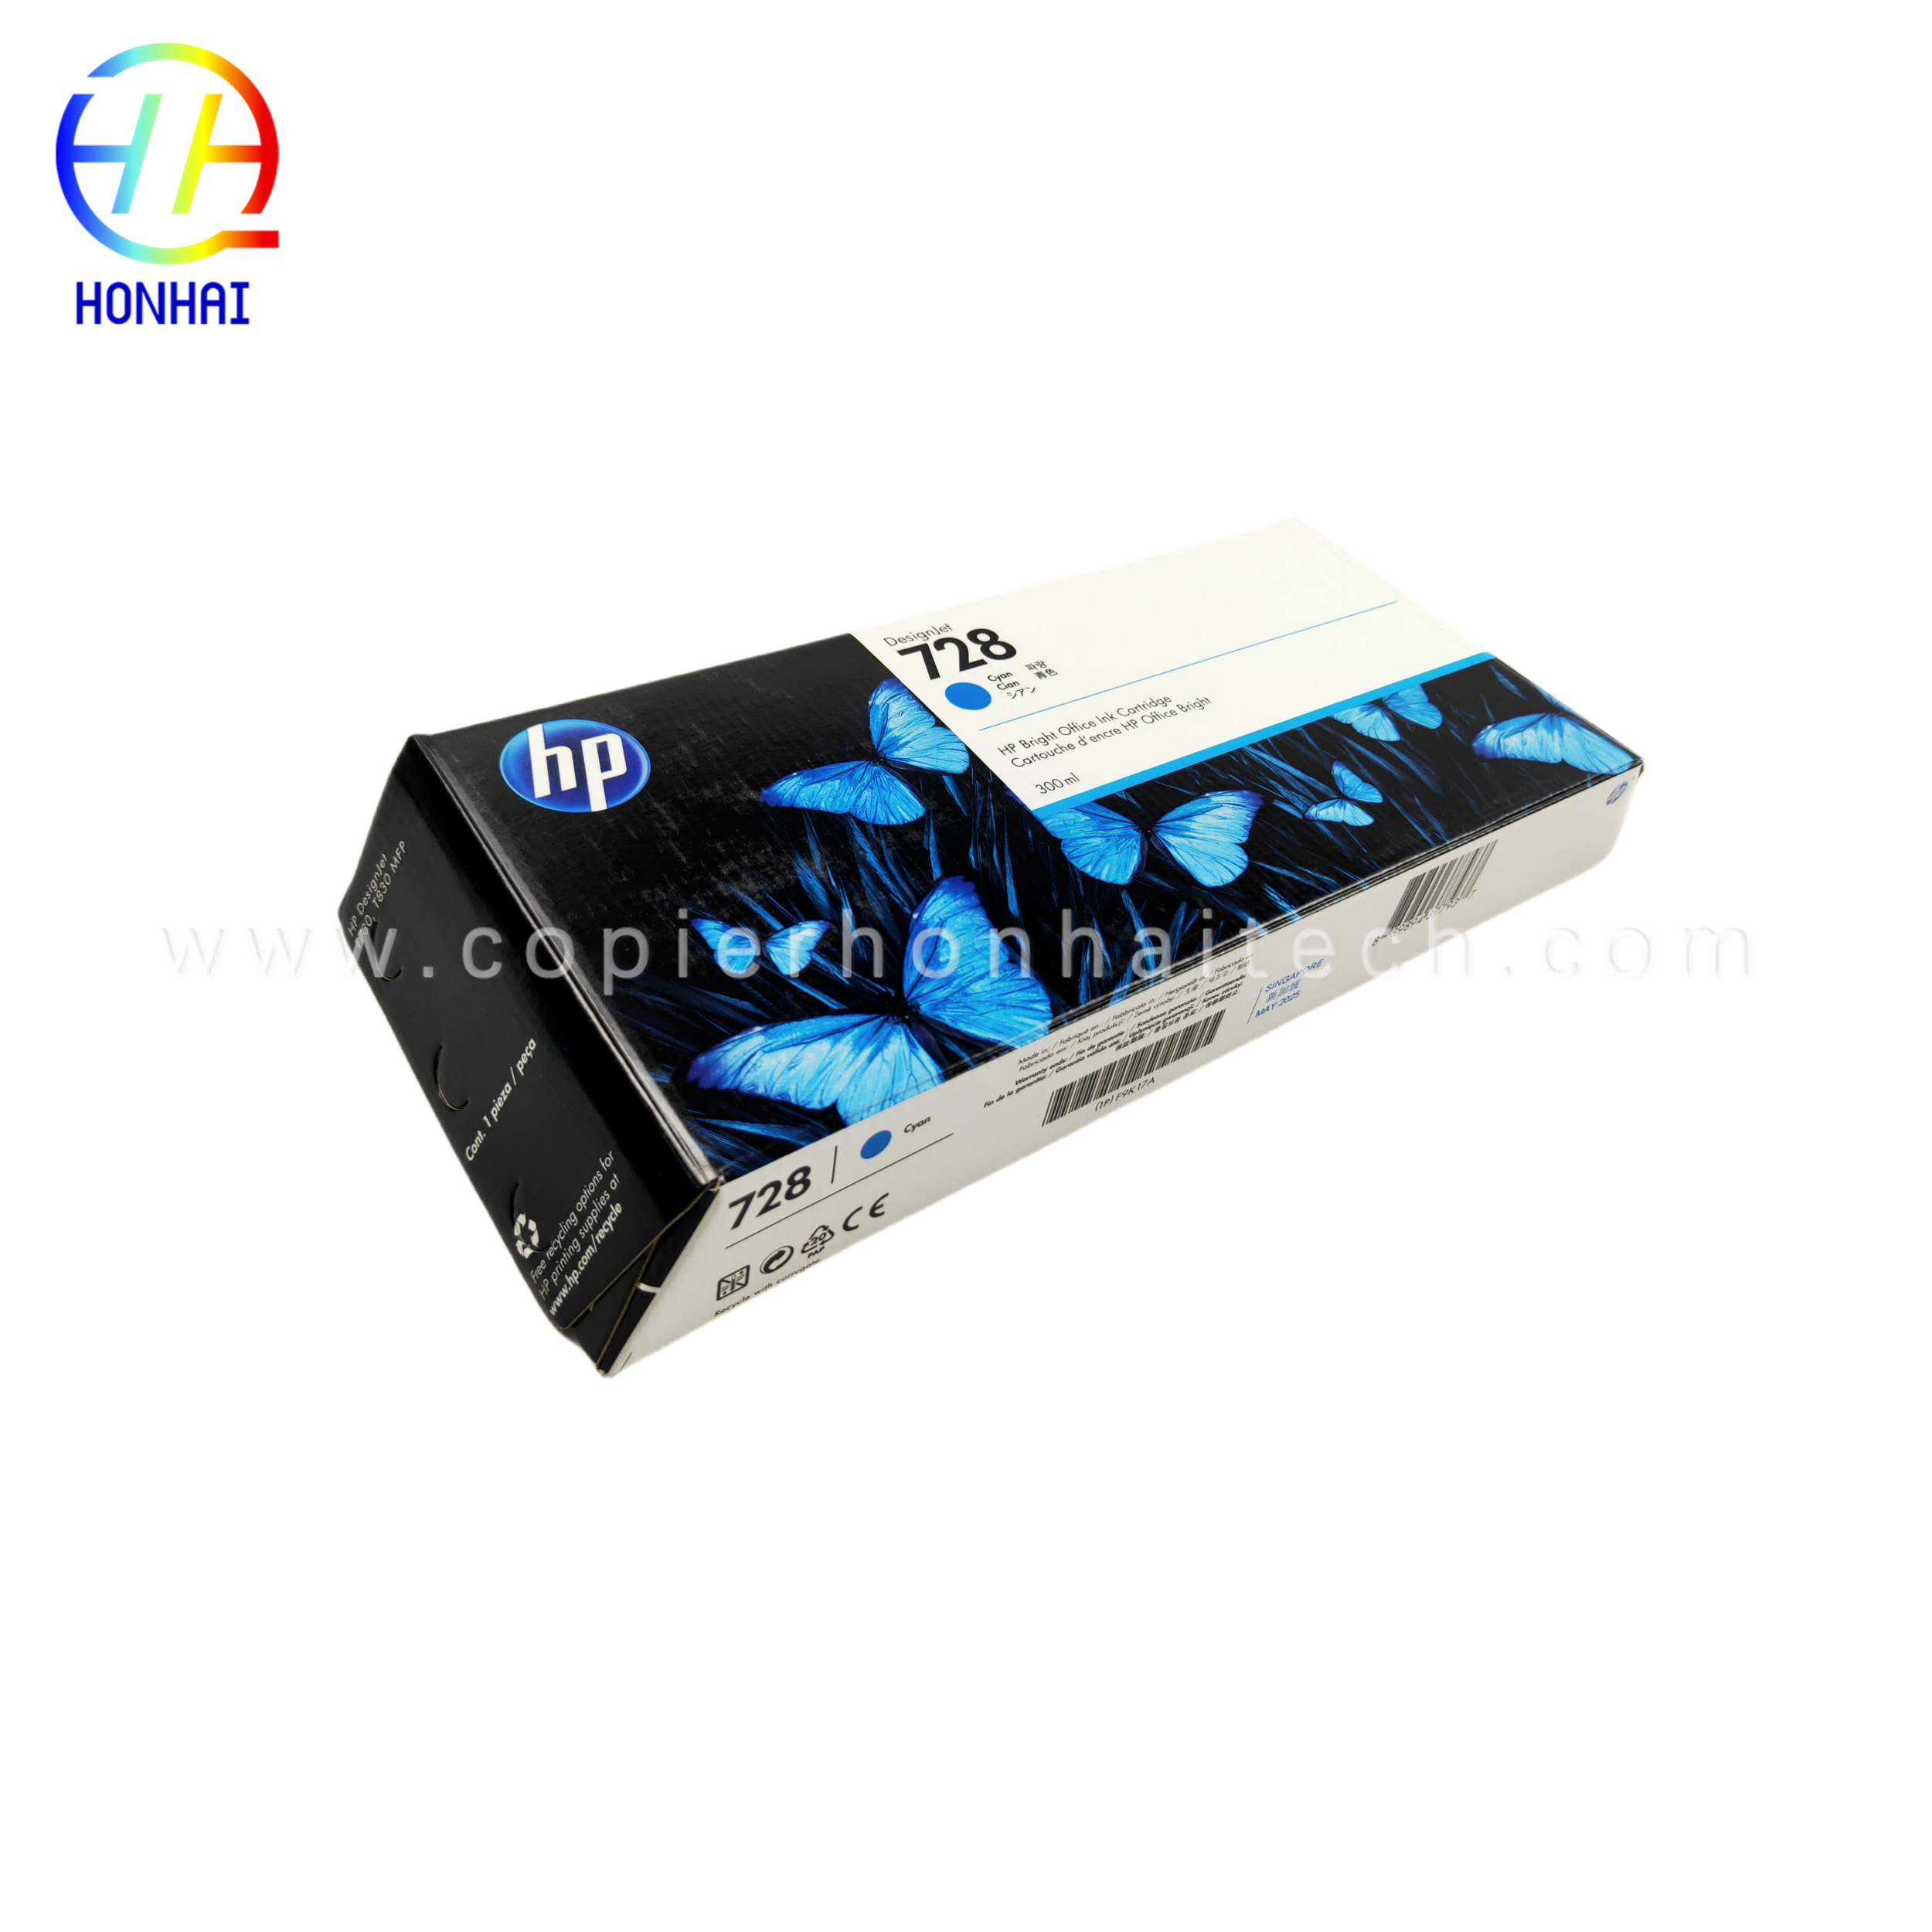 https://www.copierhonhaitech.com/original-new-ink-cartridge-cyan-for-hp-designjet-t730-and-t830-large-format-plotter-printers-and-hp-729-designjet-printhead- 728-f9k17a-produkt/